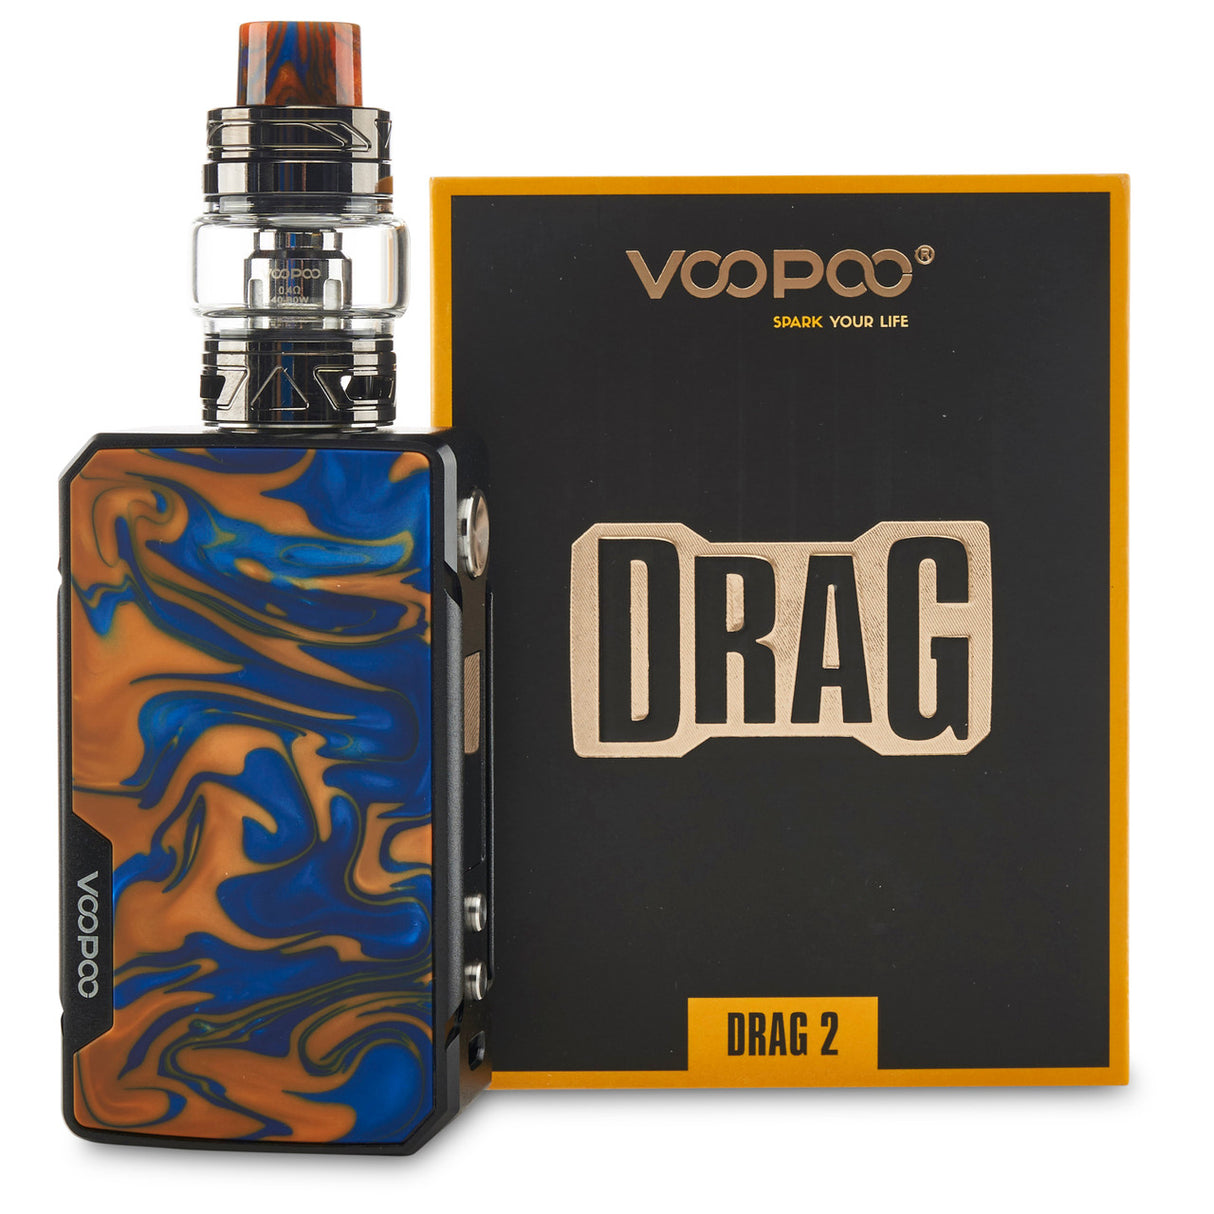 voopoo drag 2 vape device used for vaping e-liquid